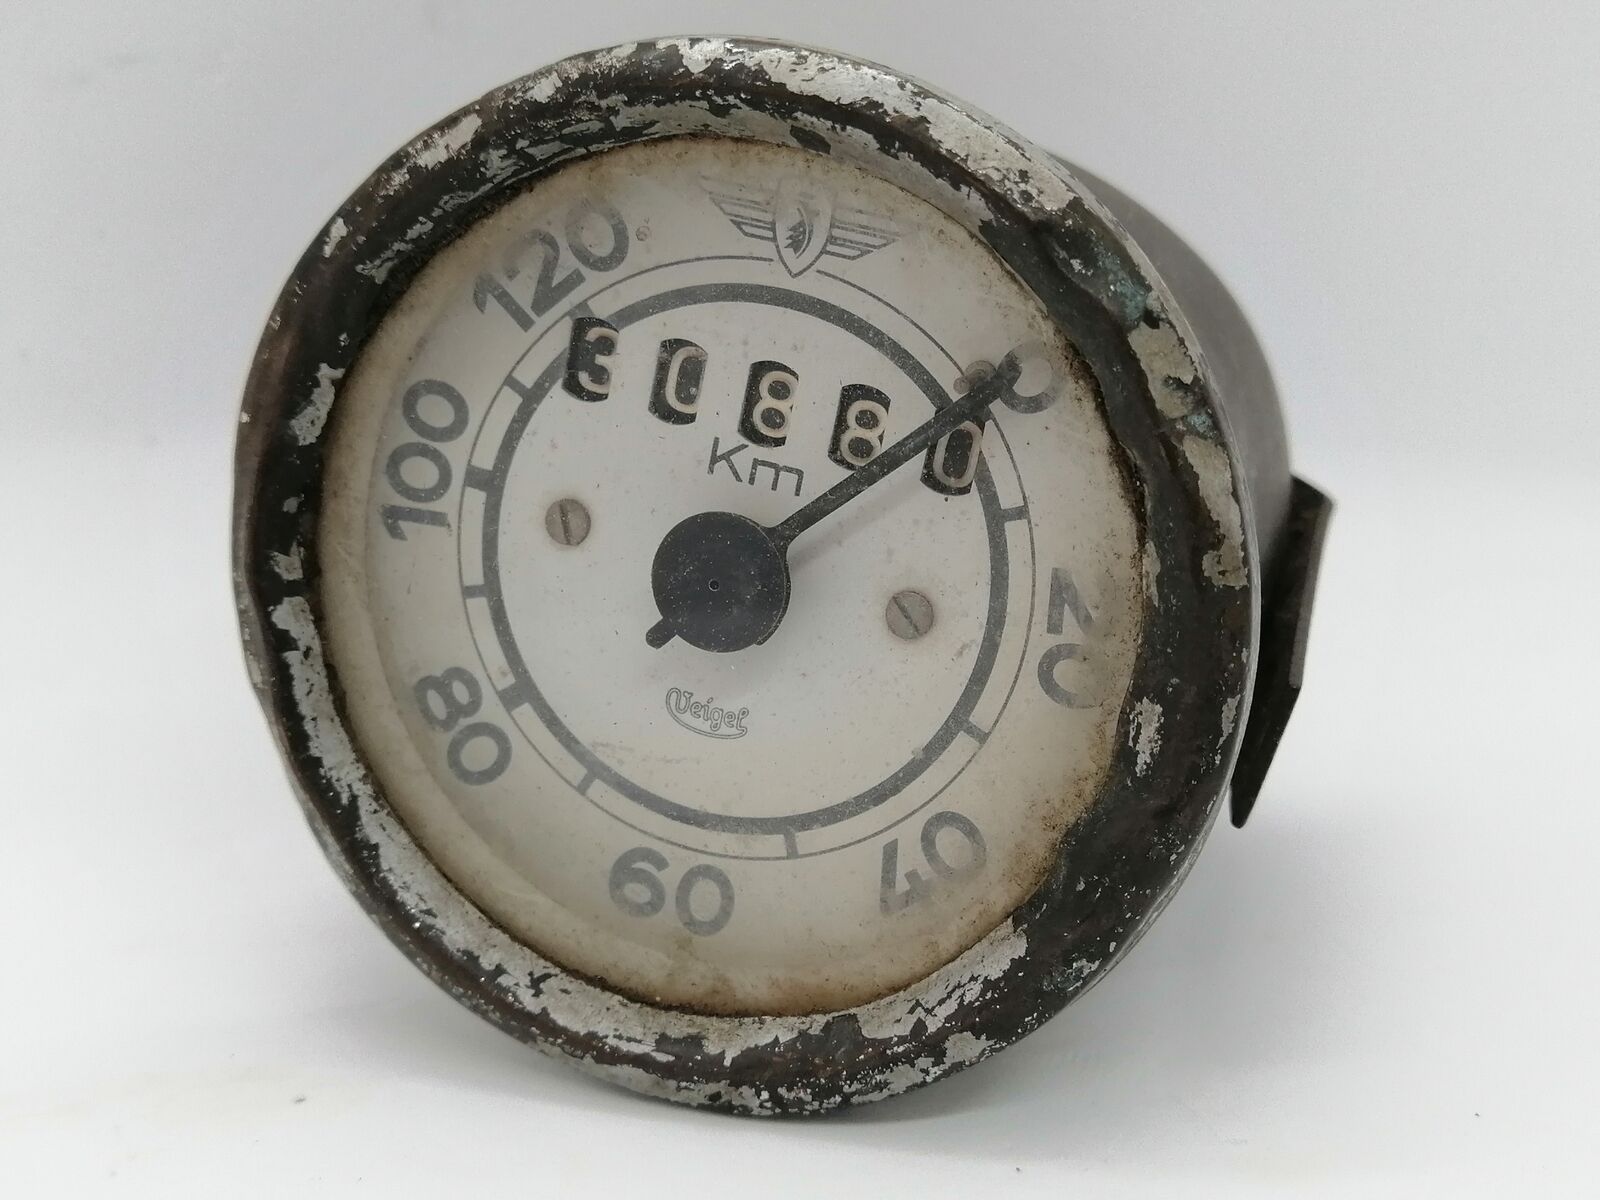 Vintage Antique VEIGEL speedometer Odometer kilometer 120km/h white dial rare